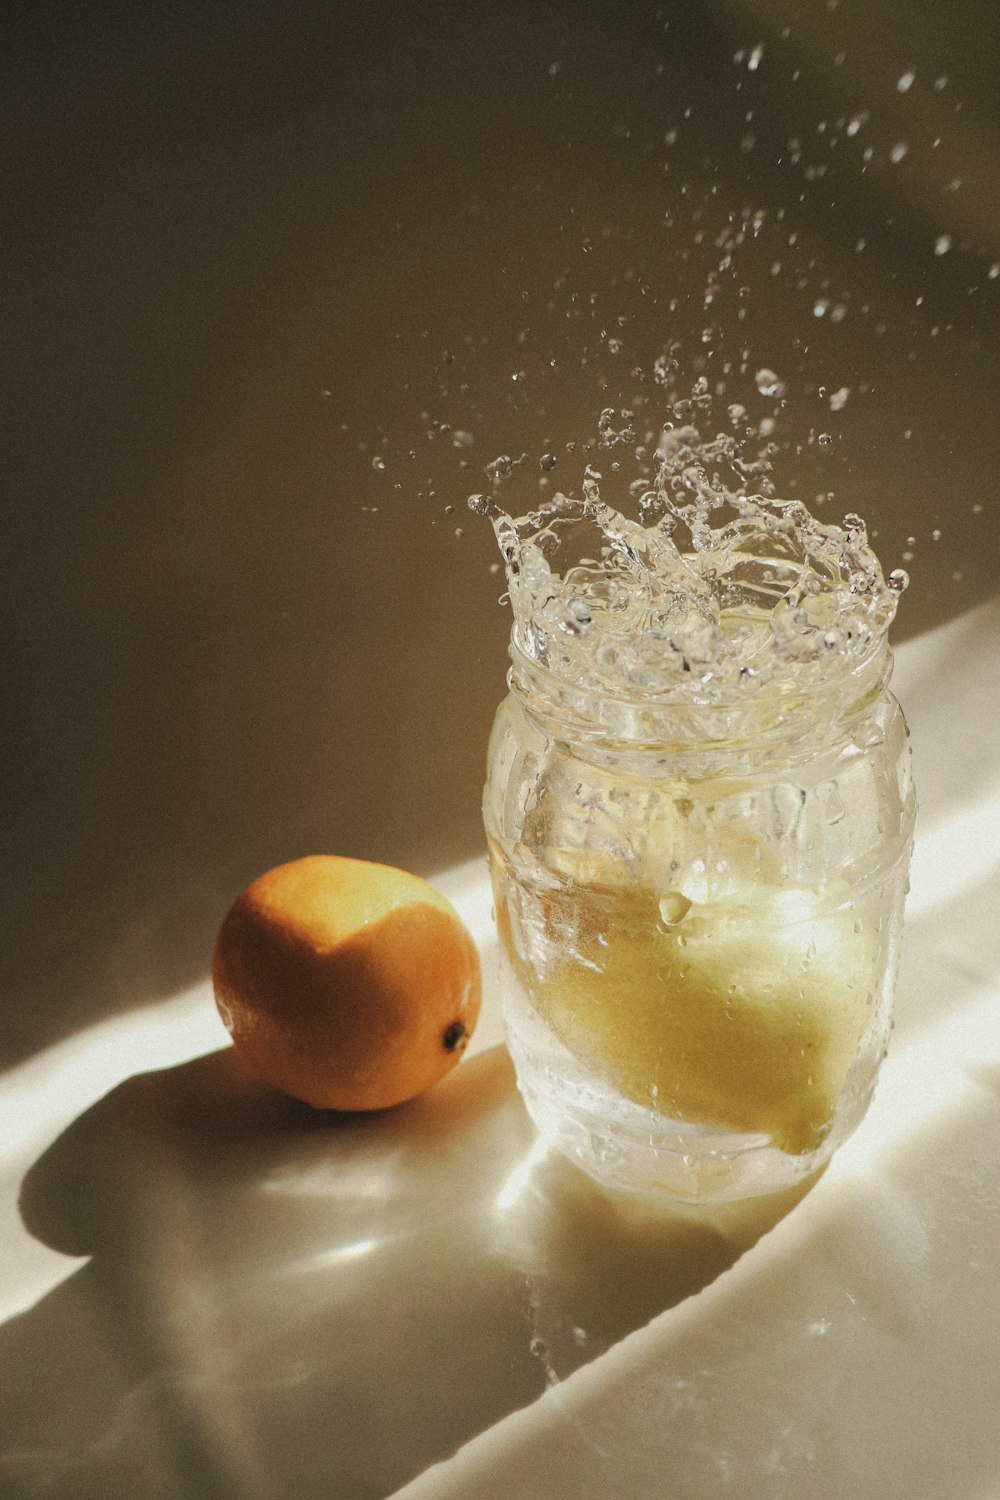 two orange fruits in clear glass jar